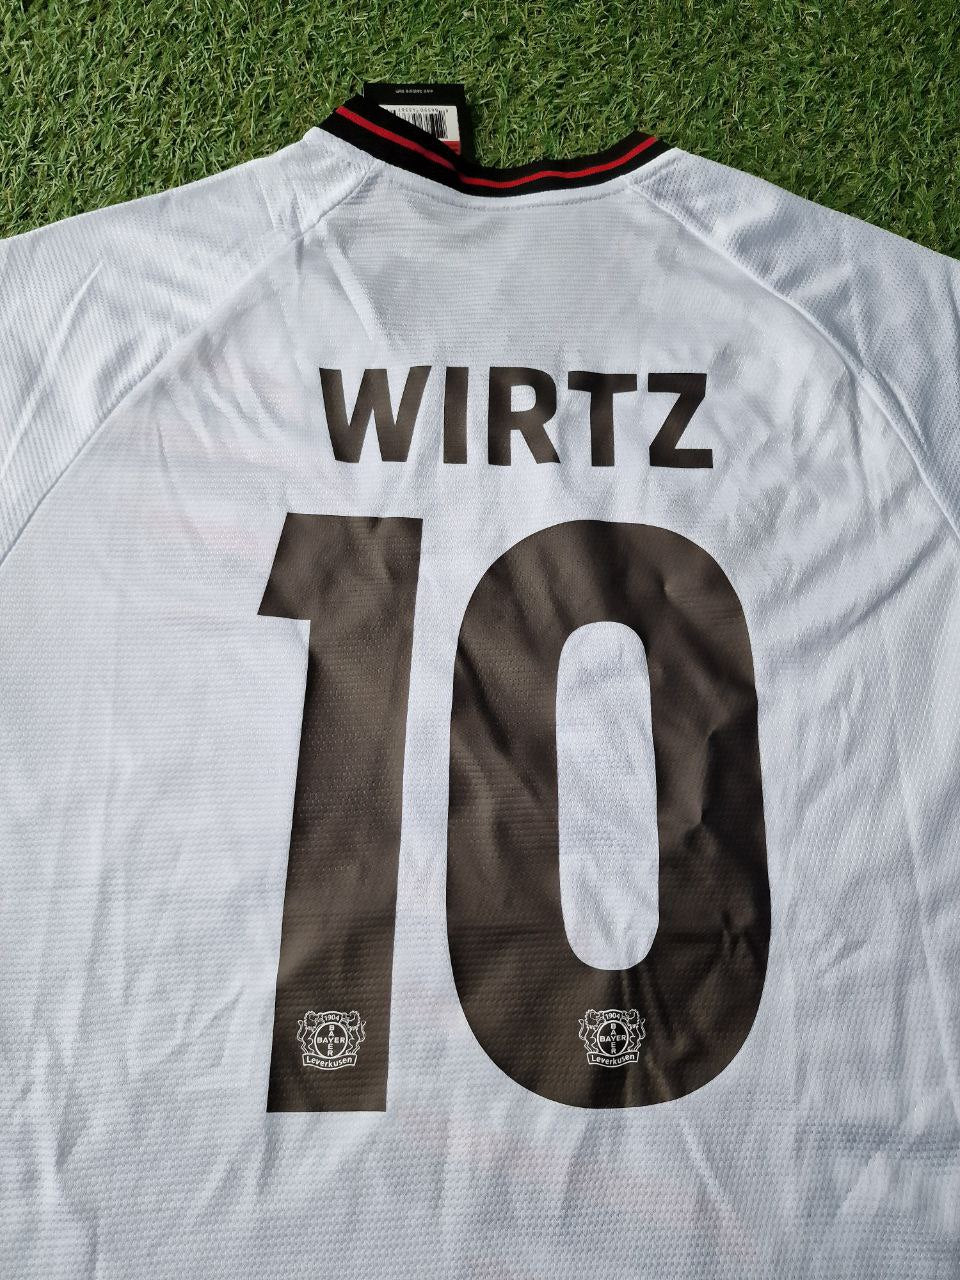 Florian Wirtz Bayer Leverkusen Fußballtrikot